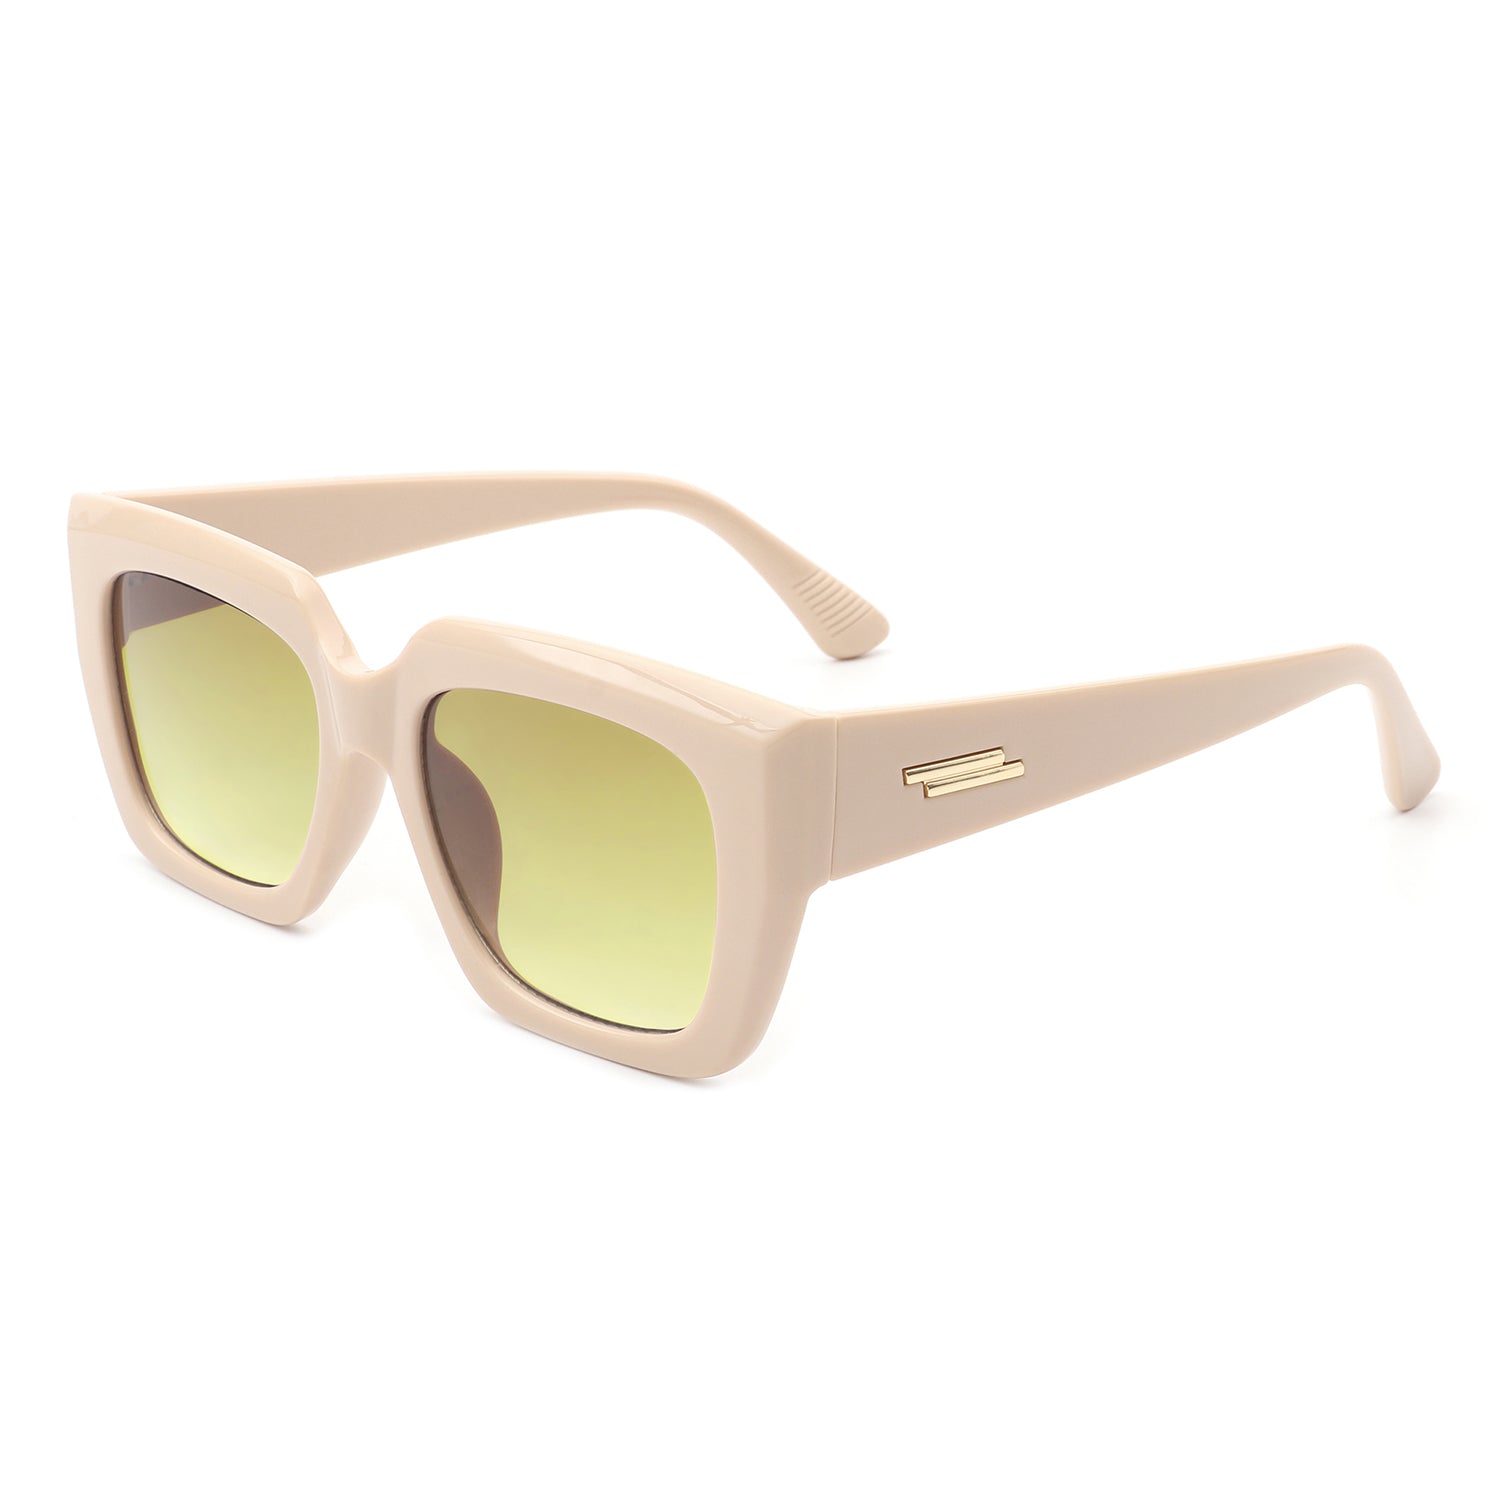 S1185 - Square Retro Flat Top Cat Eye Fashion Vintage Sunglasses